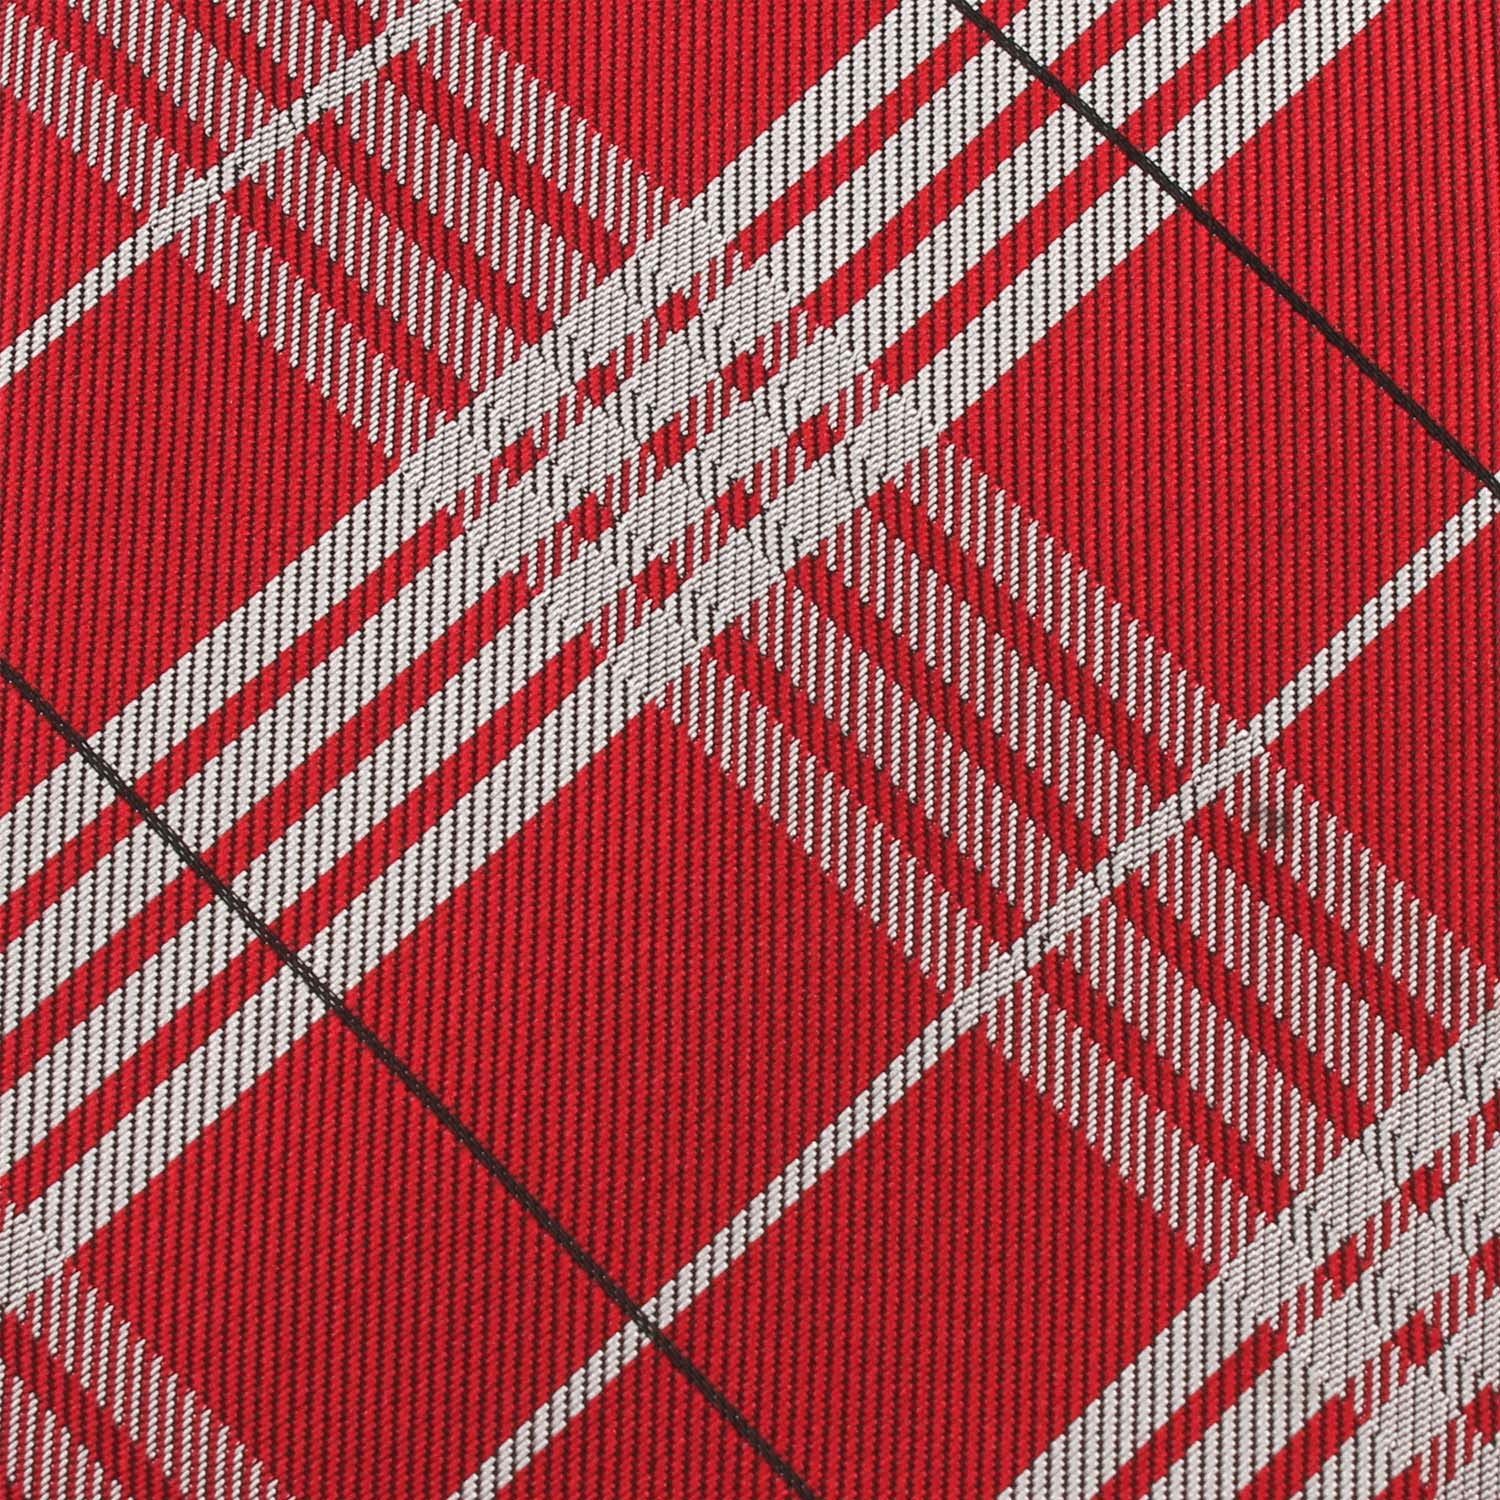 Scarlet Maroon with White Stripes Fabric Skinny Tie X269